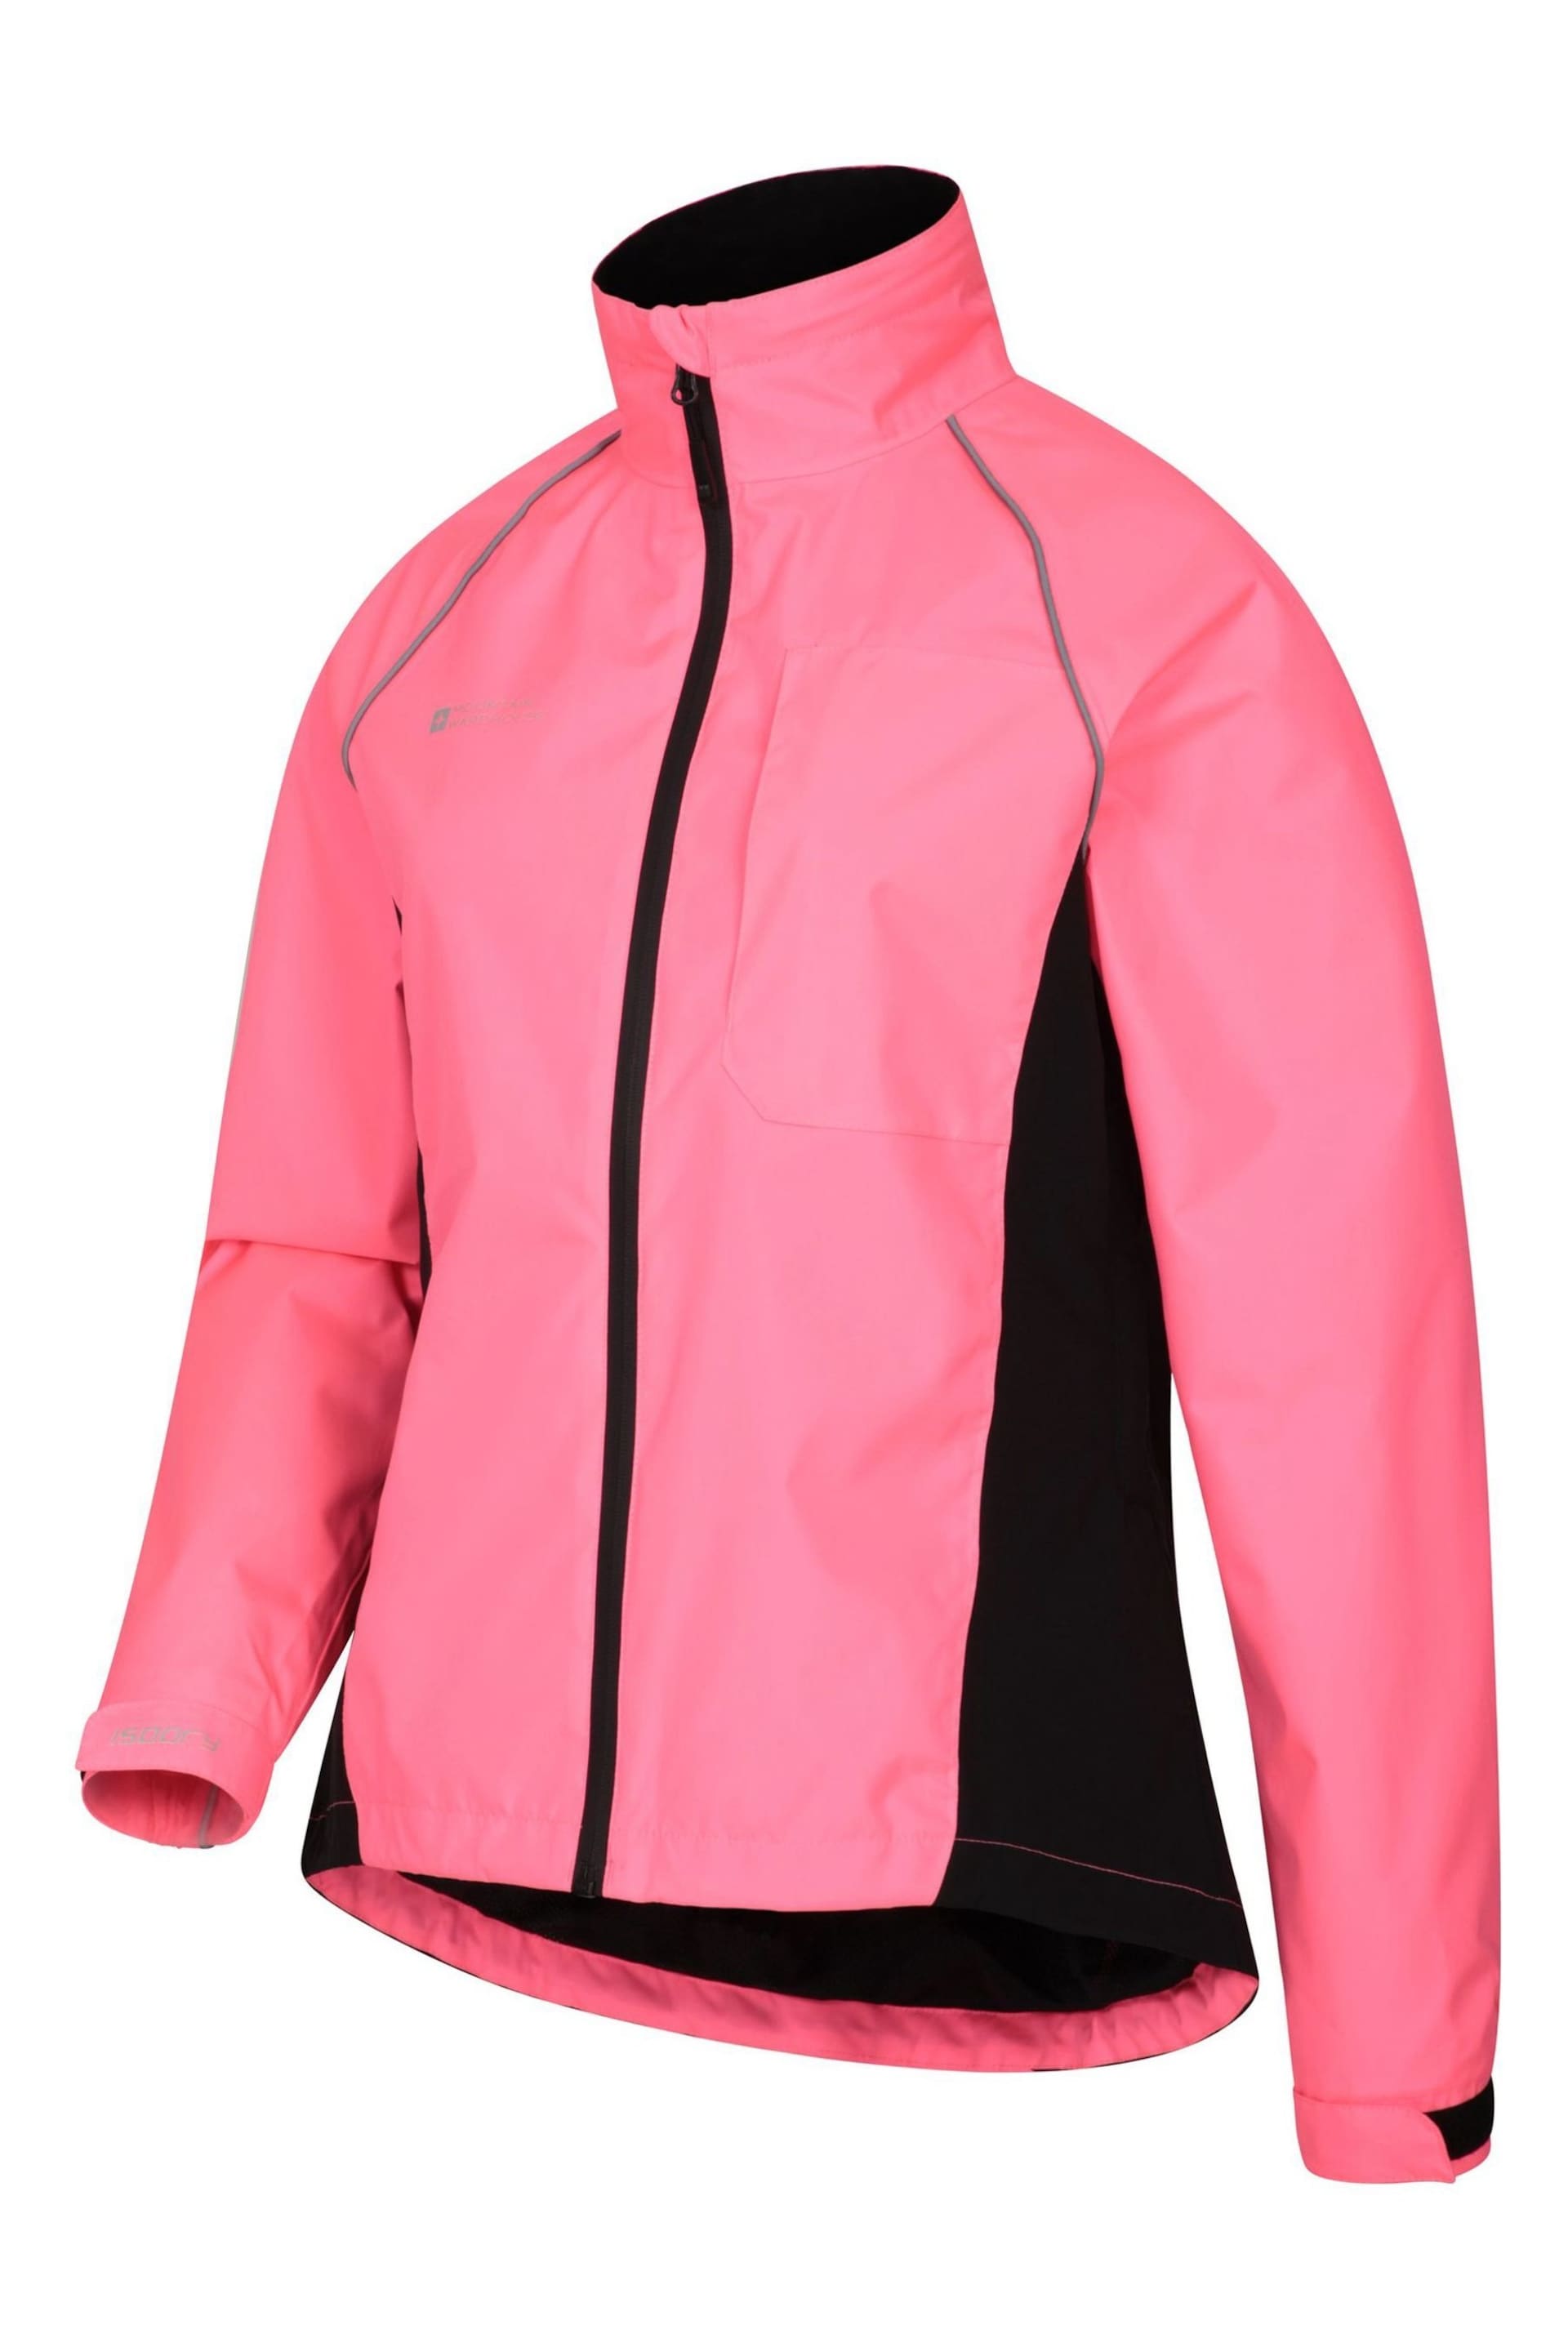 Mountain Warehouse Pink Adrenaline Womens Waterproof Iso-Viz Jacket - Image 3 of 5